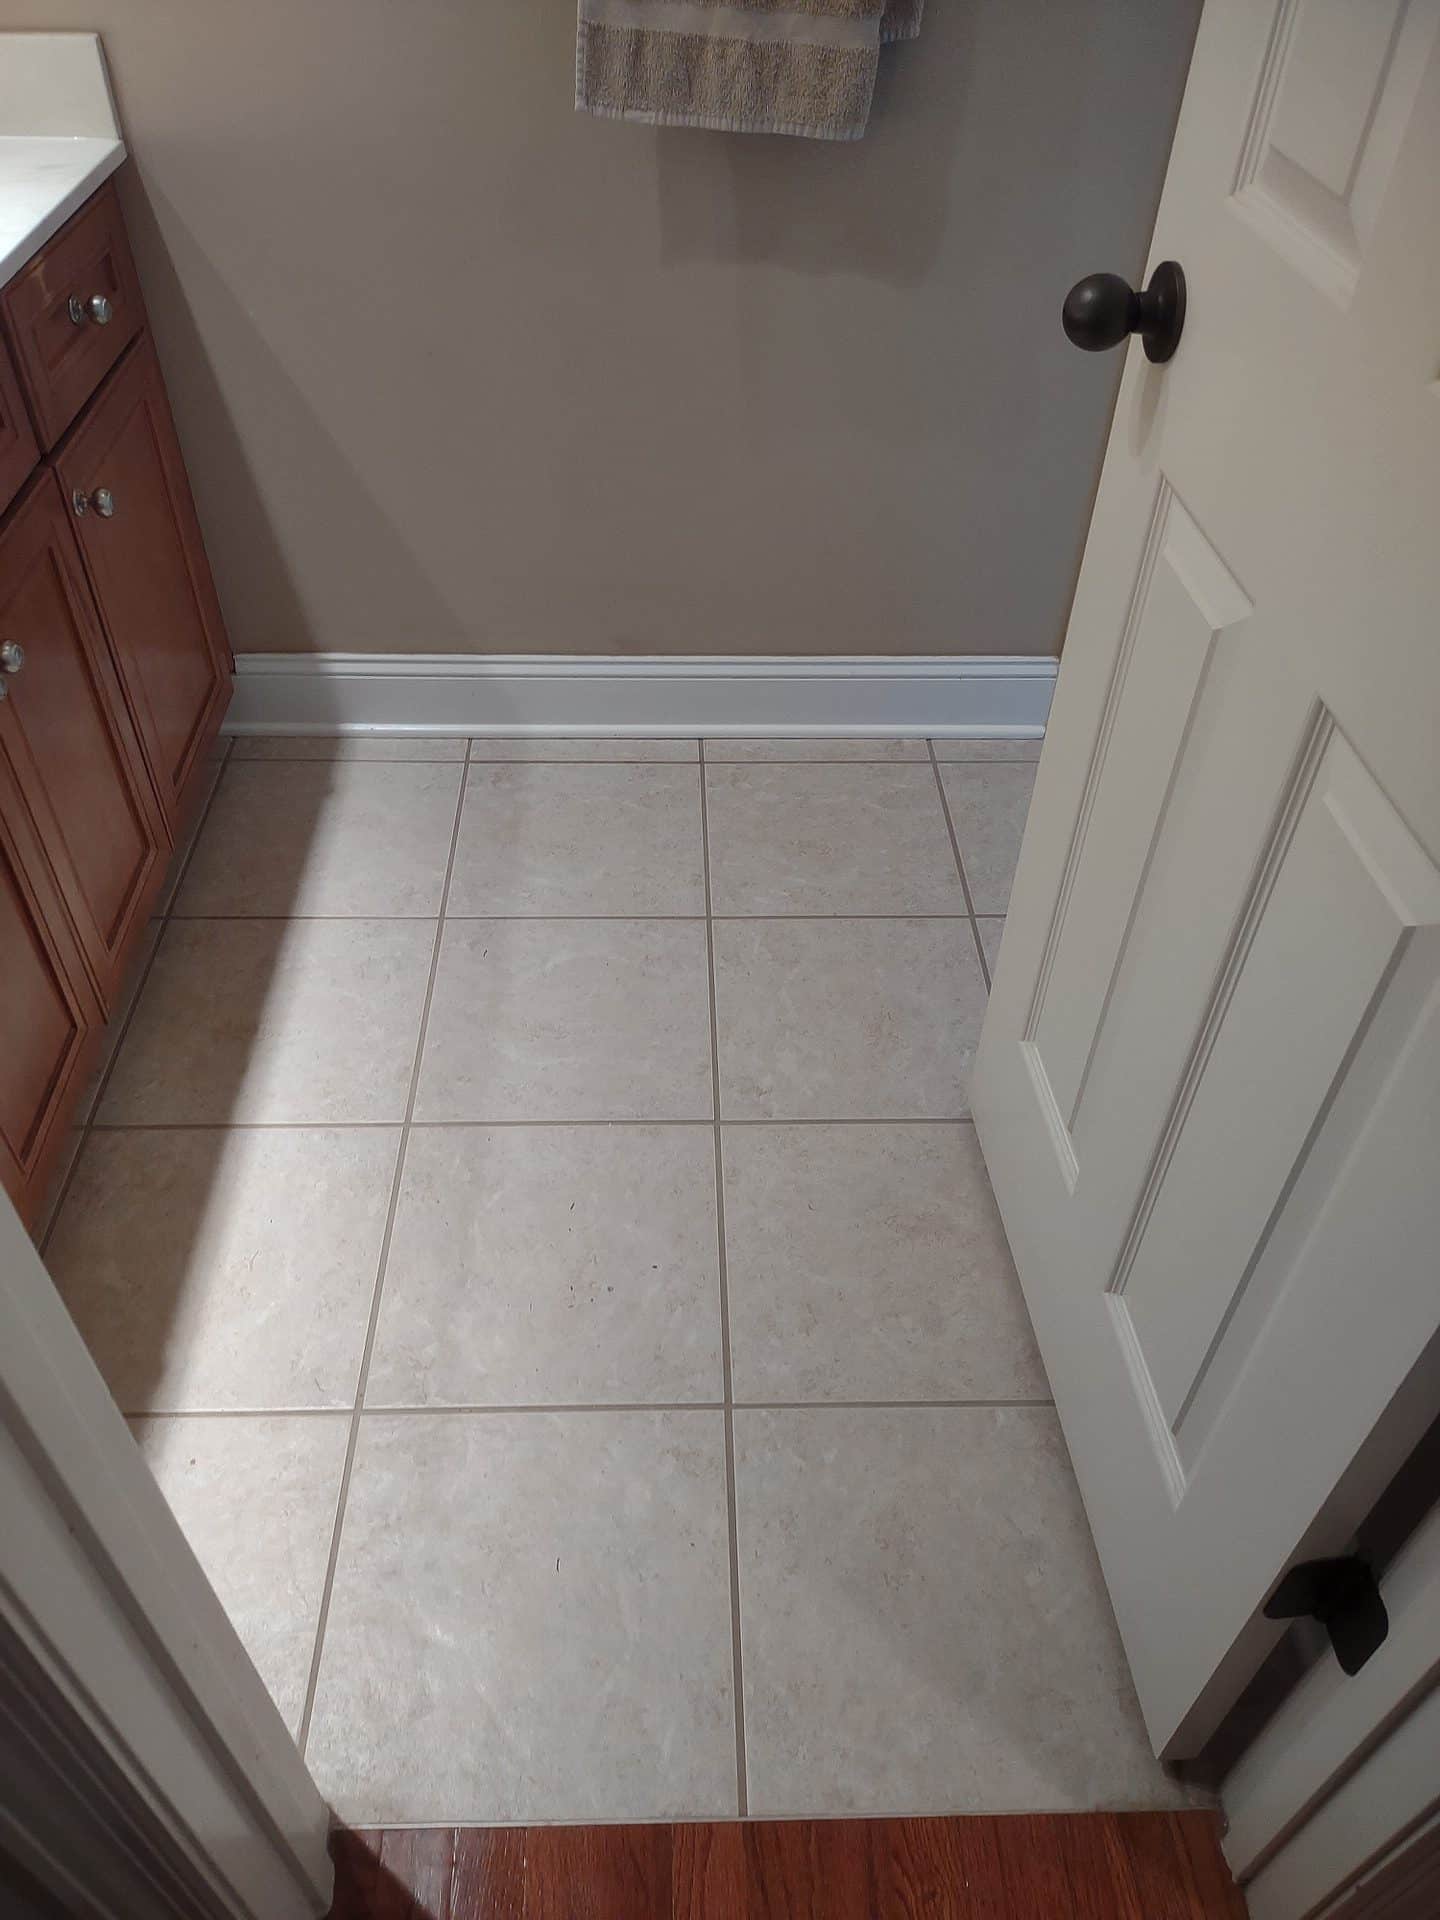 floor tile before